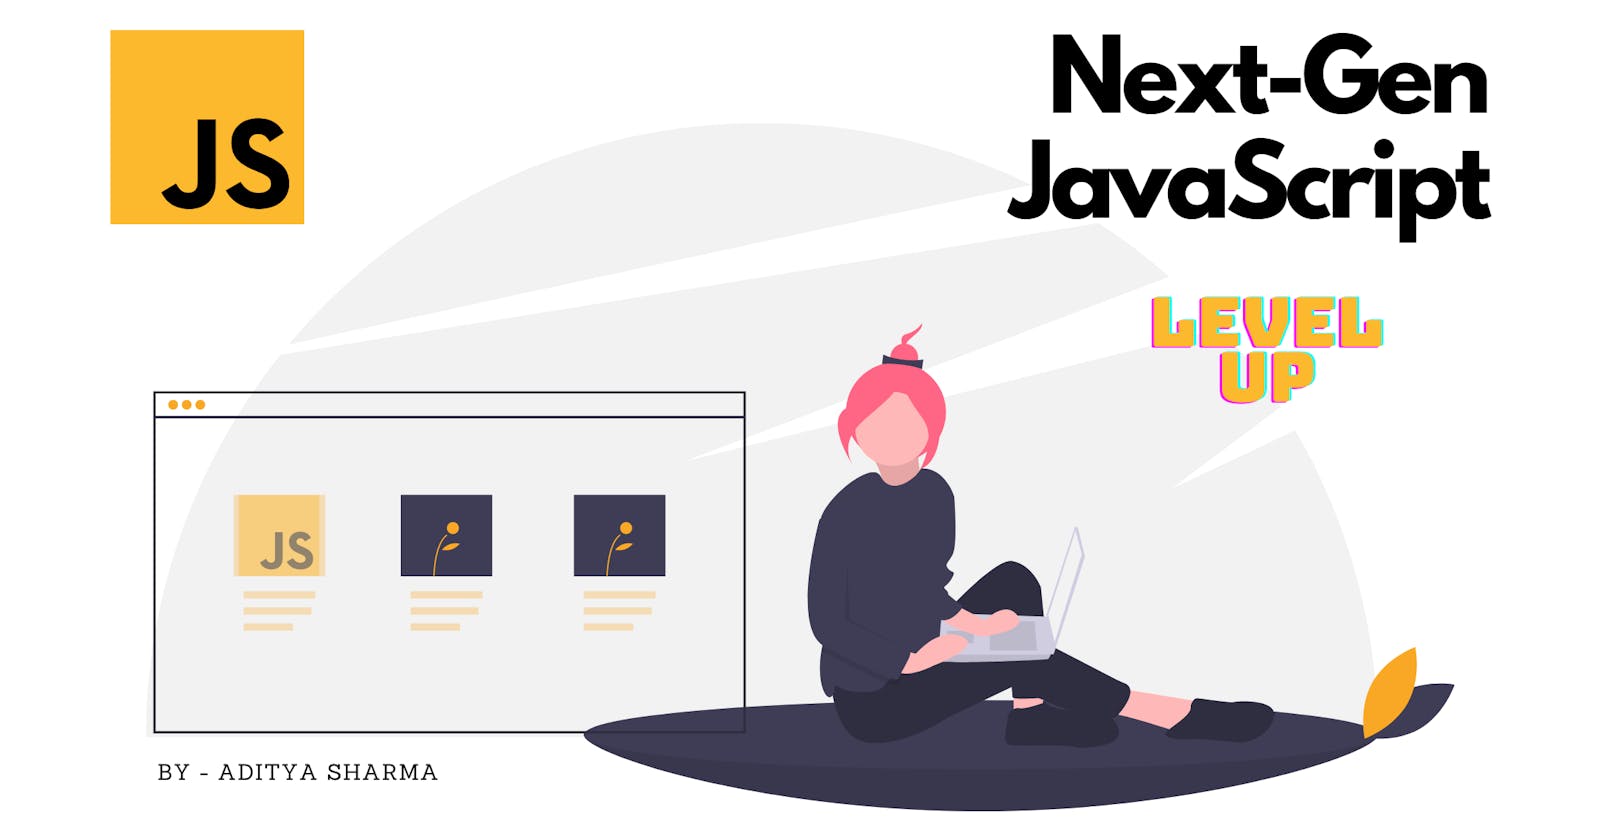 Next-Gen JavaScript - Level Up